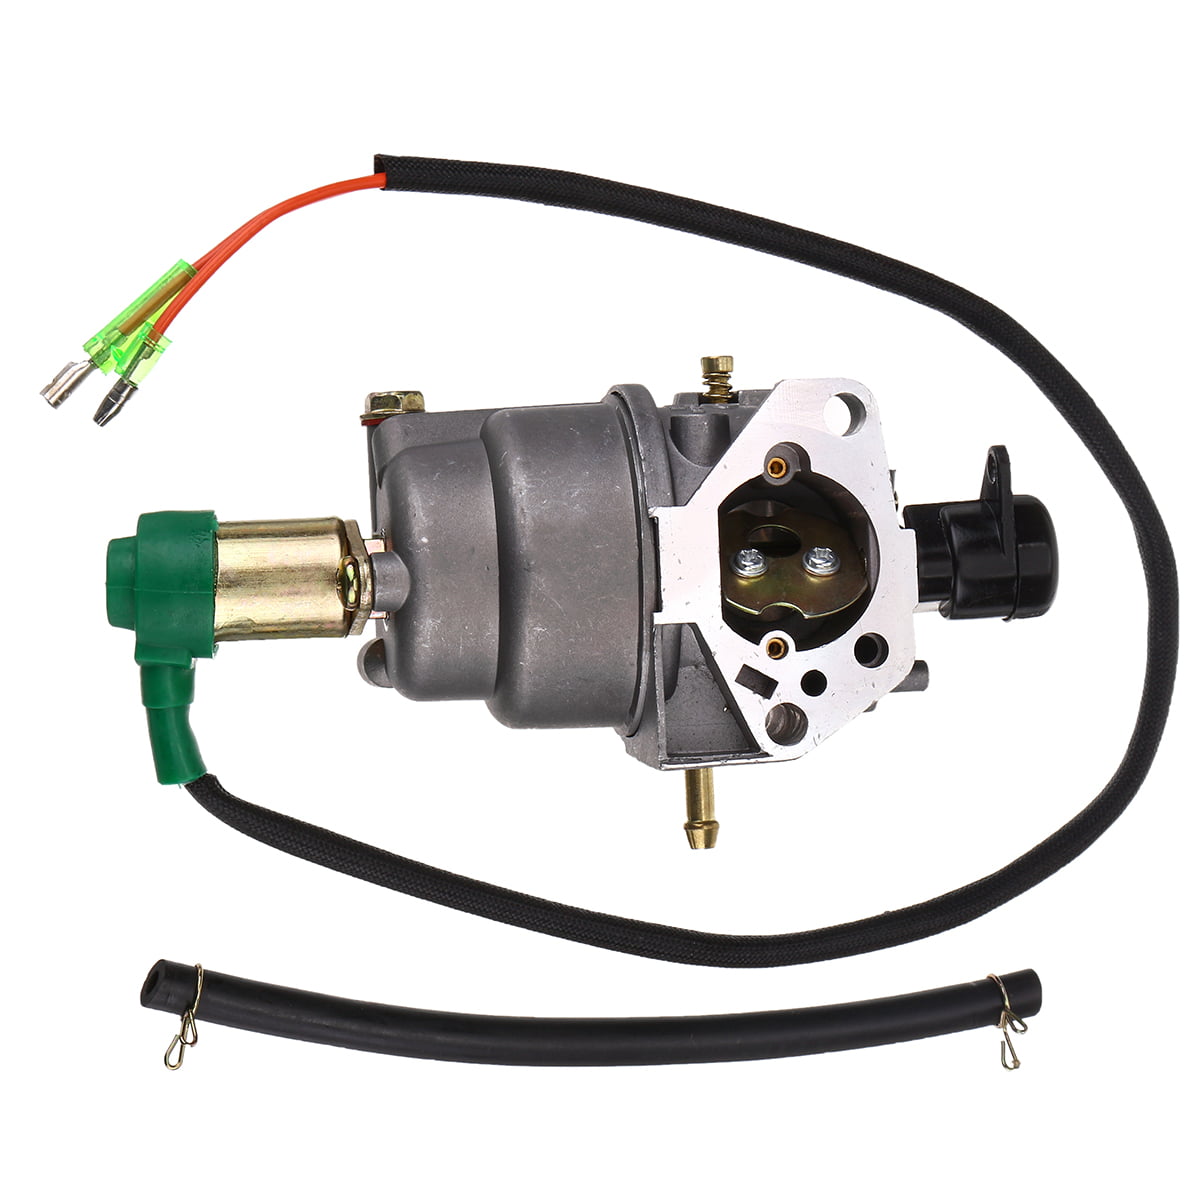 Details about   Generator Carburetor For Generac Centurion GP5000 5944 0055770 005577-1 005578-0 